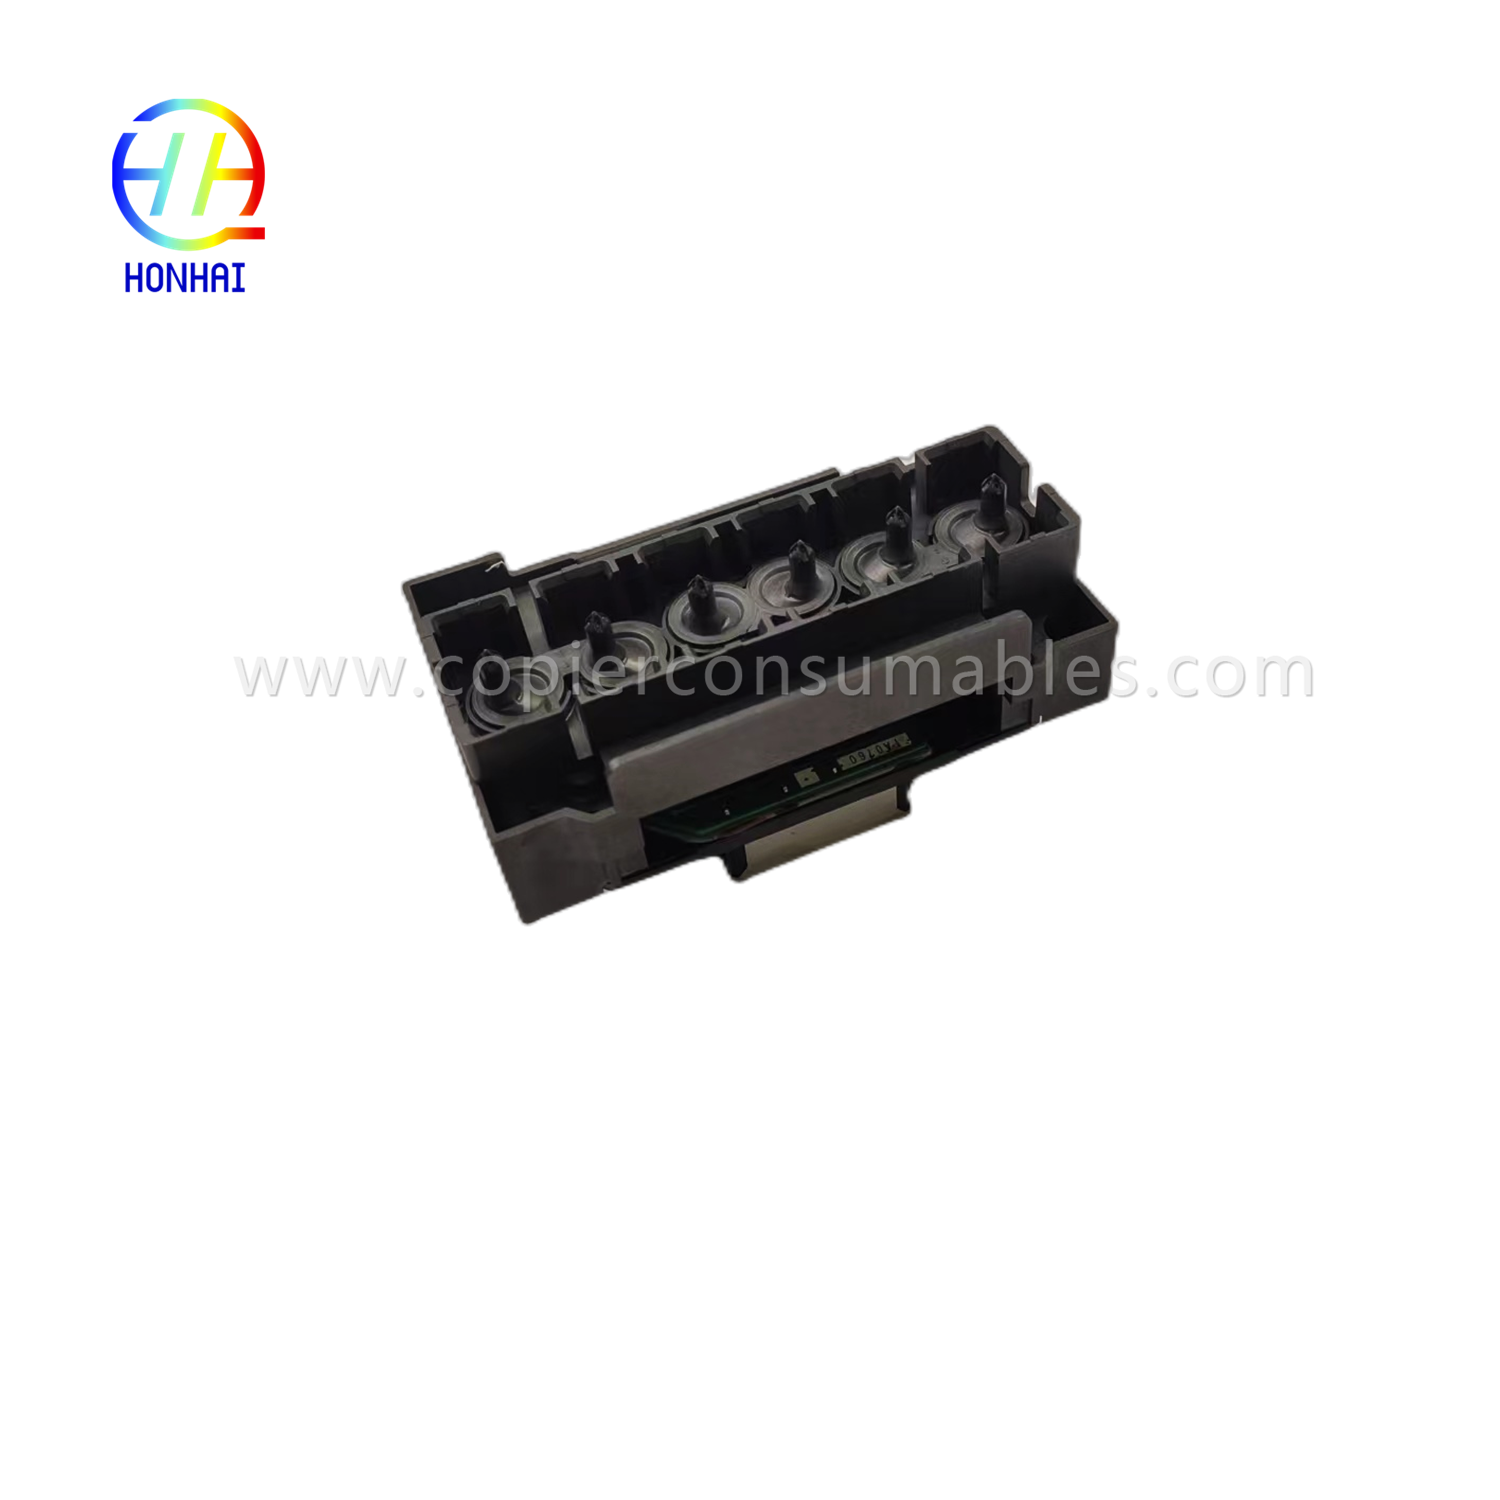 Cabeçote de impressão para Epson L800 L801 L850 L805 R290 R280 R285 F180000 Cabeçote de impressão